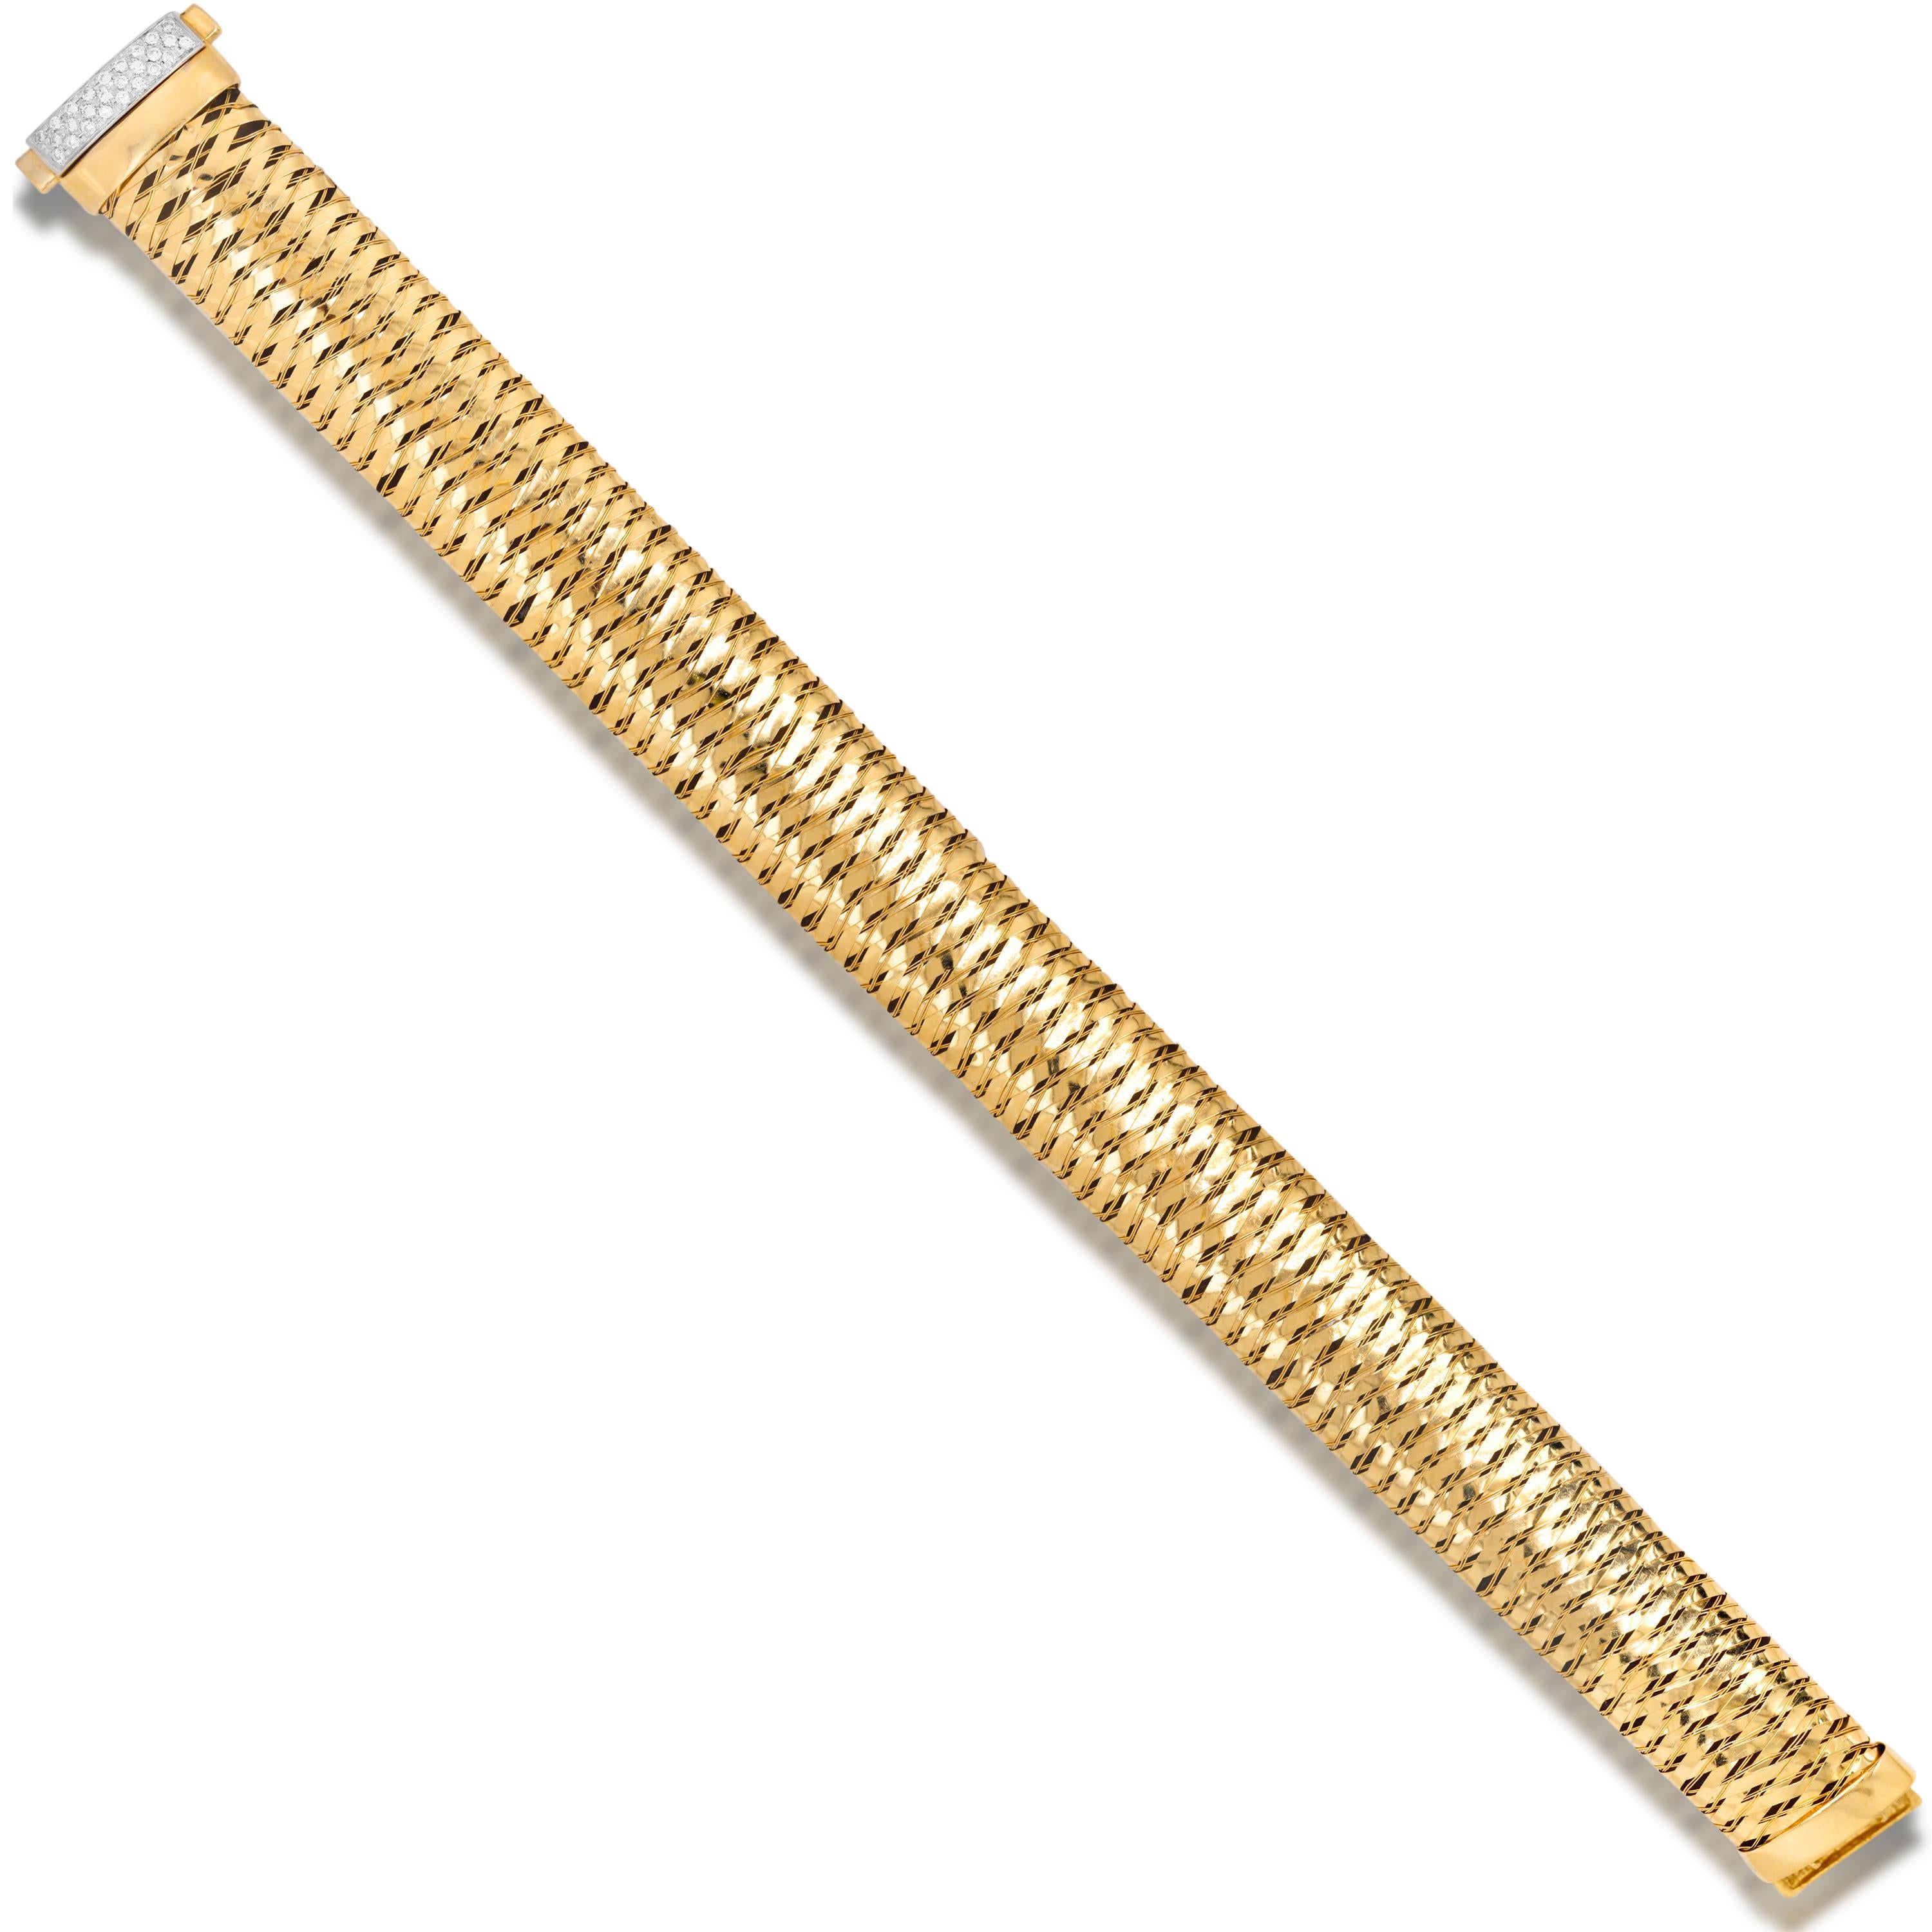 Roberto Coin Primavera 18K Yellow Gold Diamond Bracelet

Genuine Roberto Coin bracelet from the 